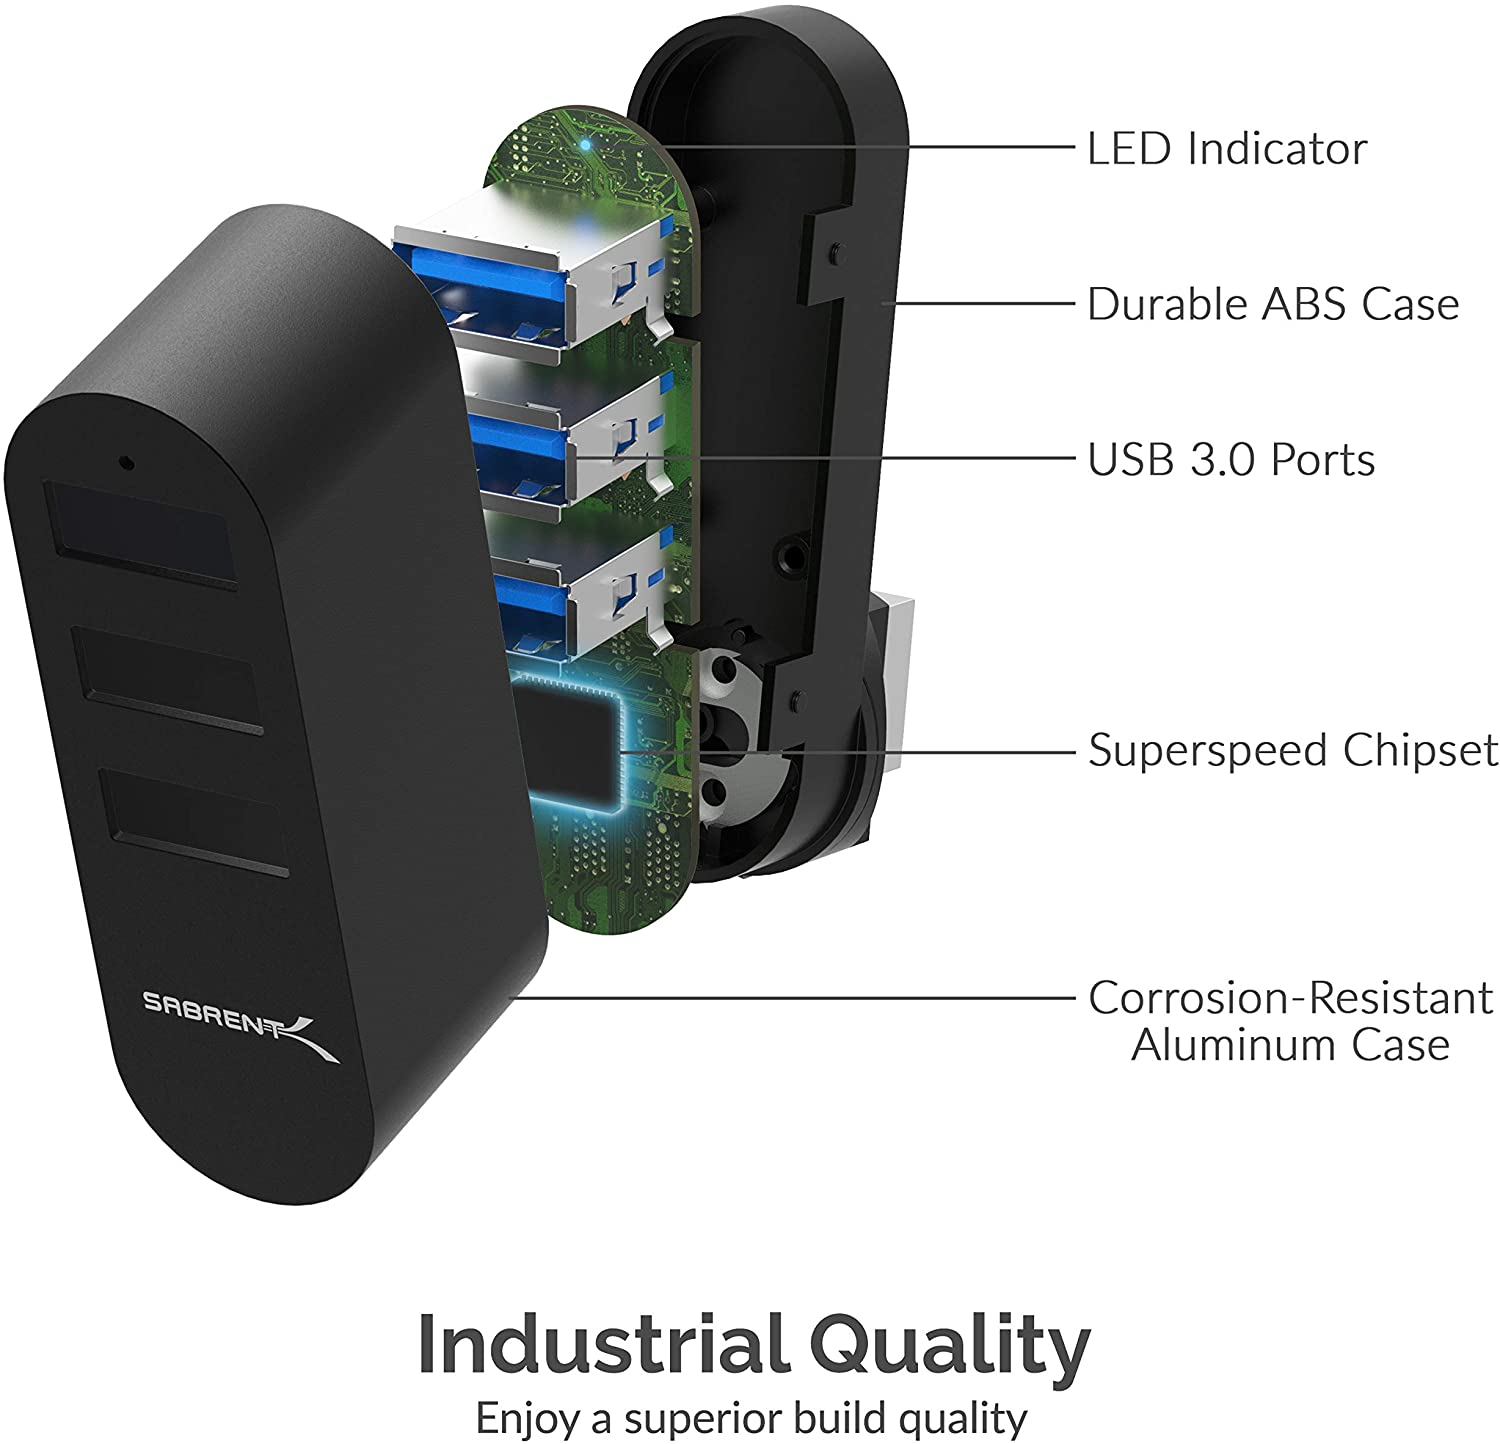 SABRENT Premium 3 Port Aluminum Mini USB 3.0 Hub [90°/180° Degree Rotatable] (HB-R3MB)